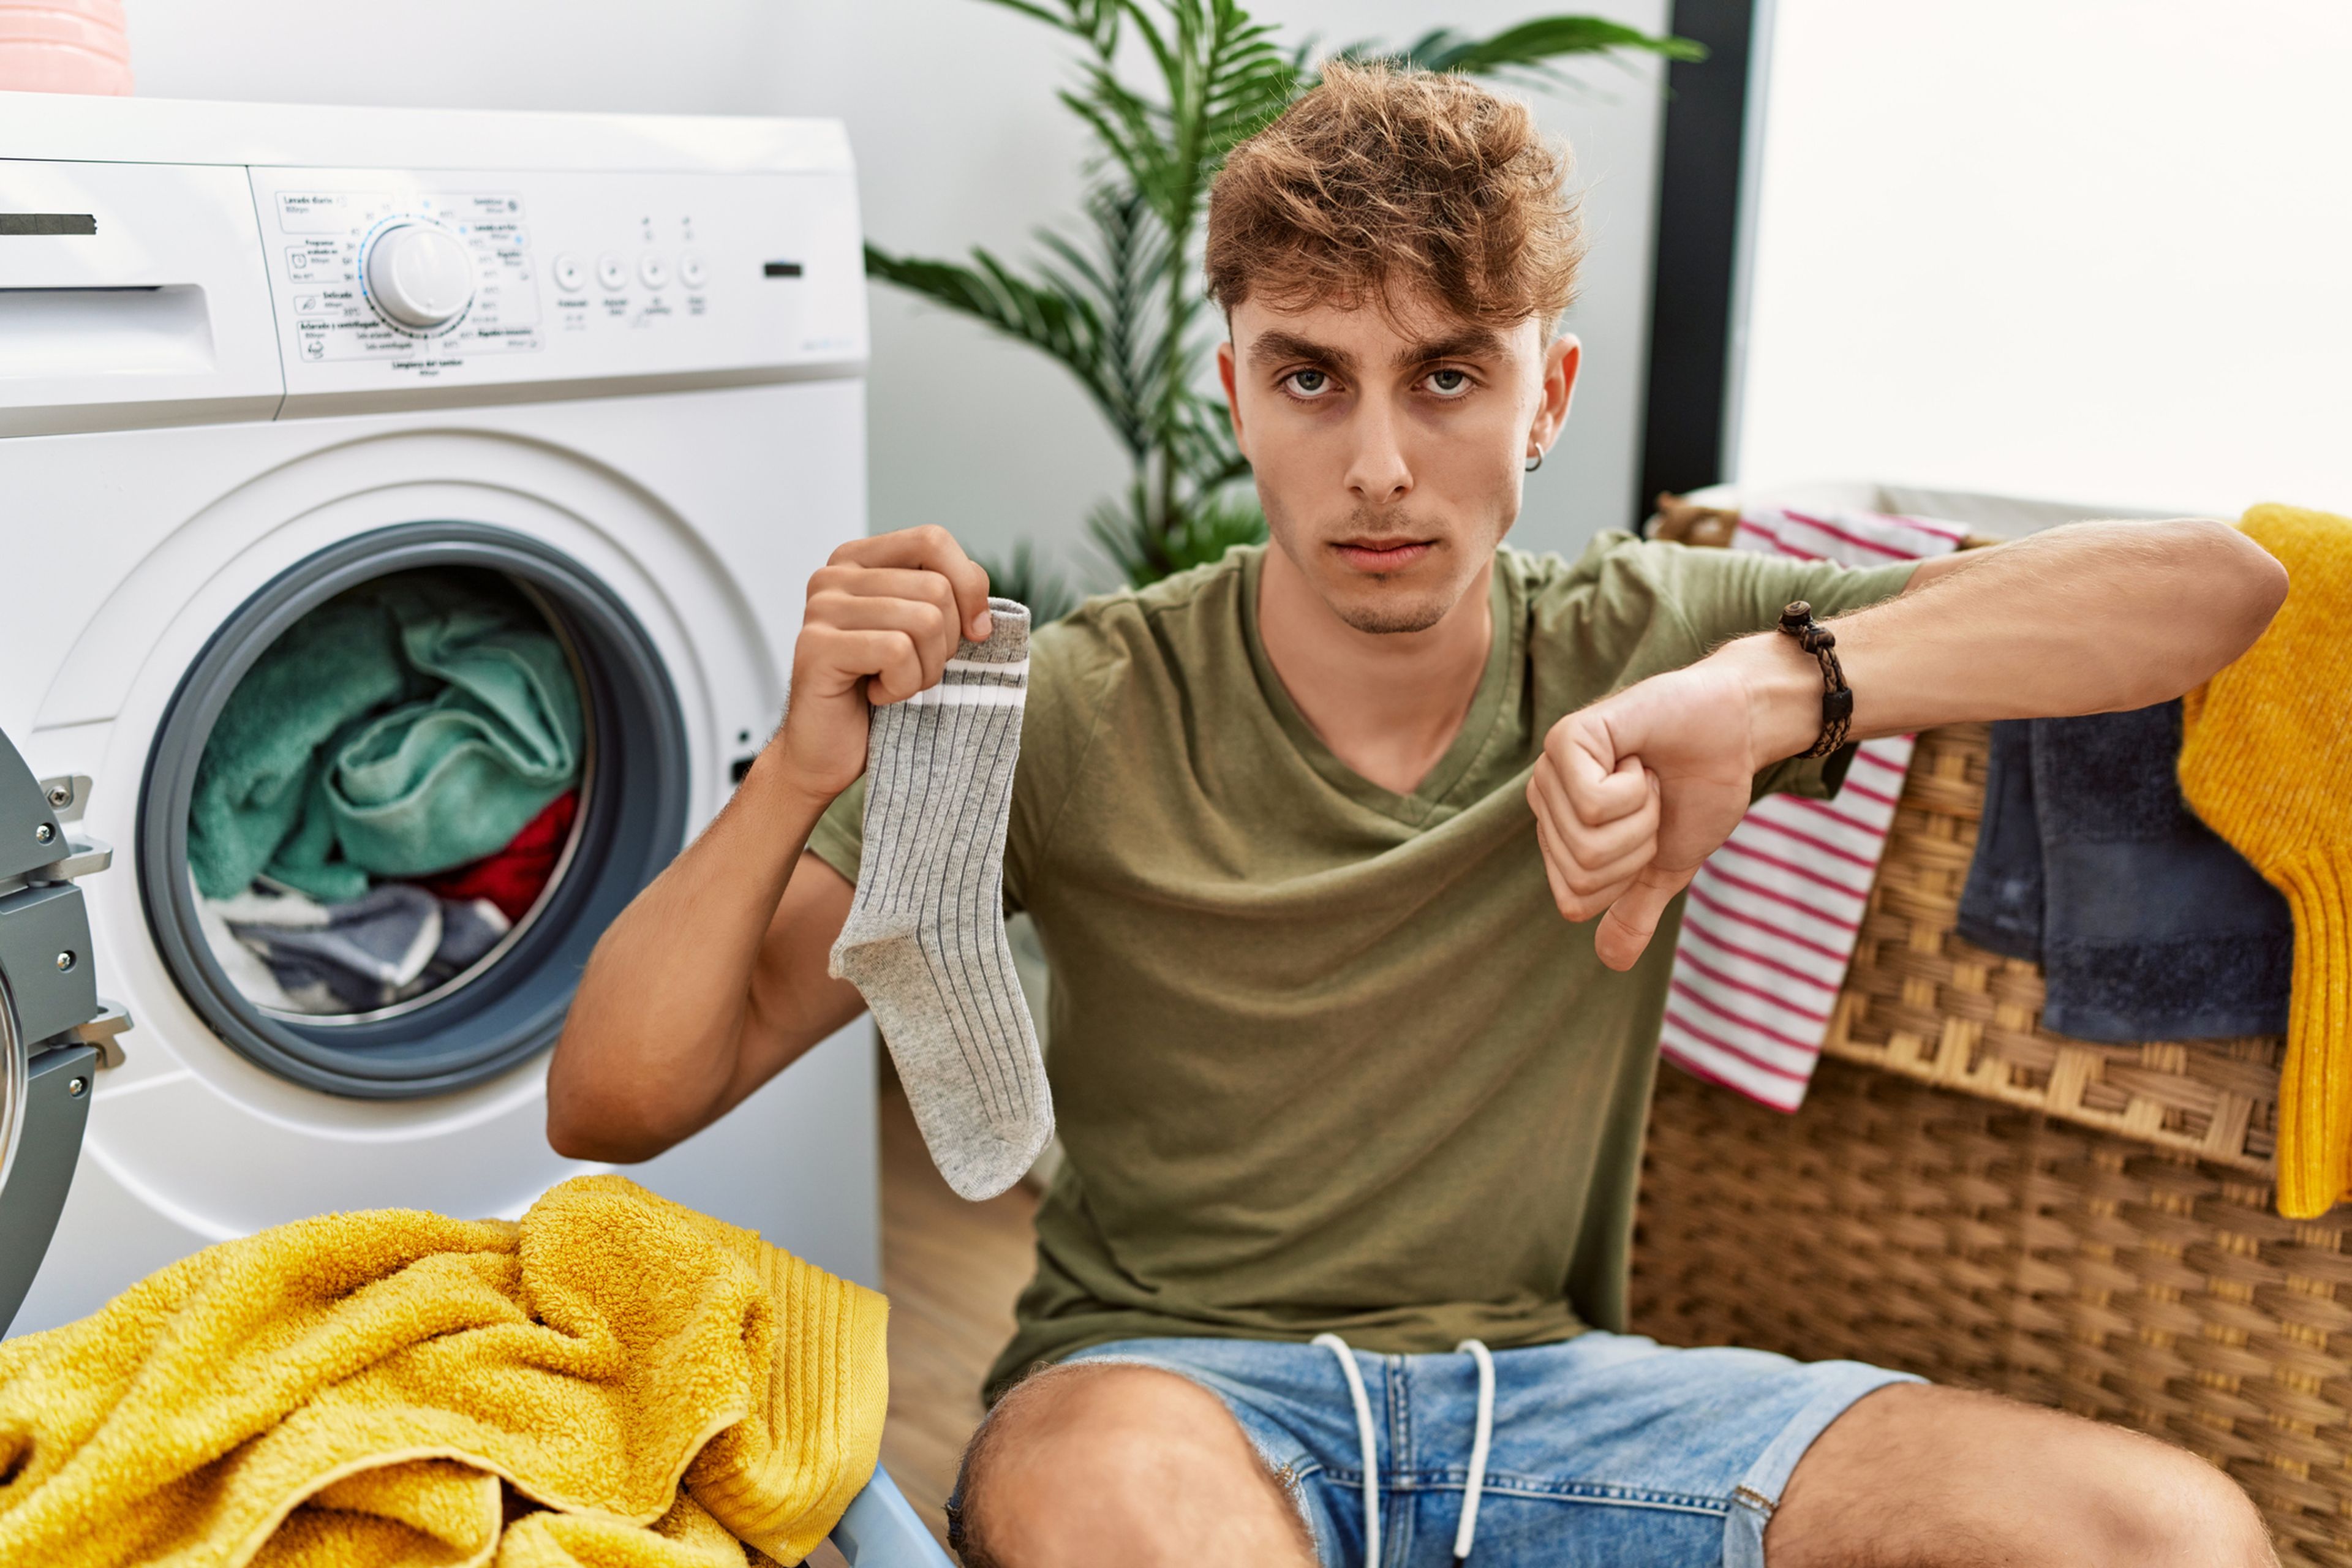 Ropa: consejos para usar tu secadora